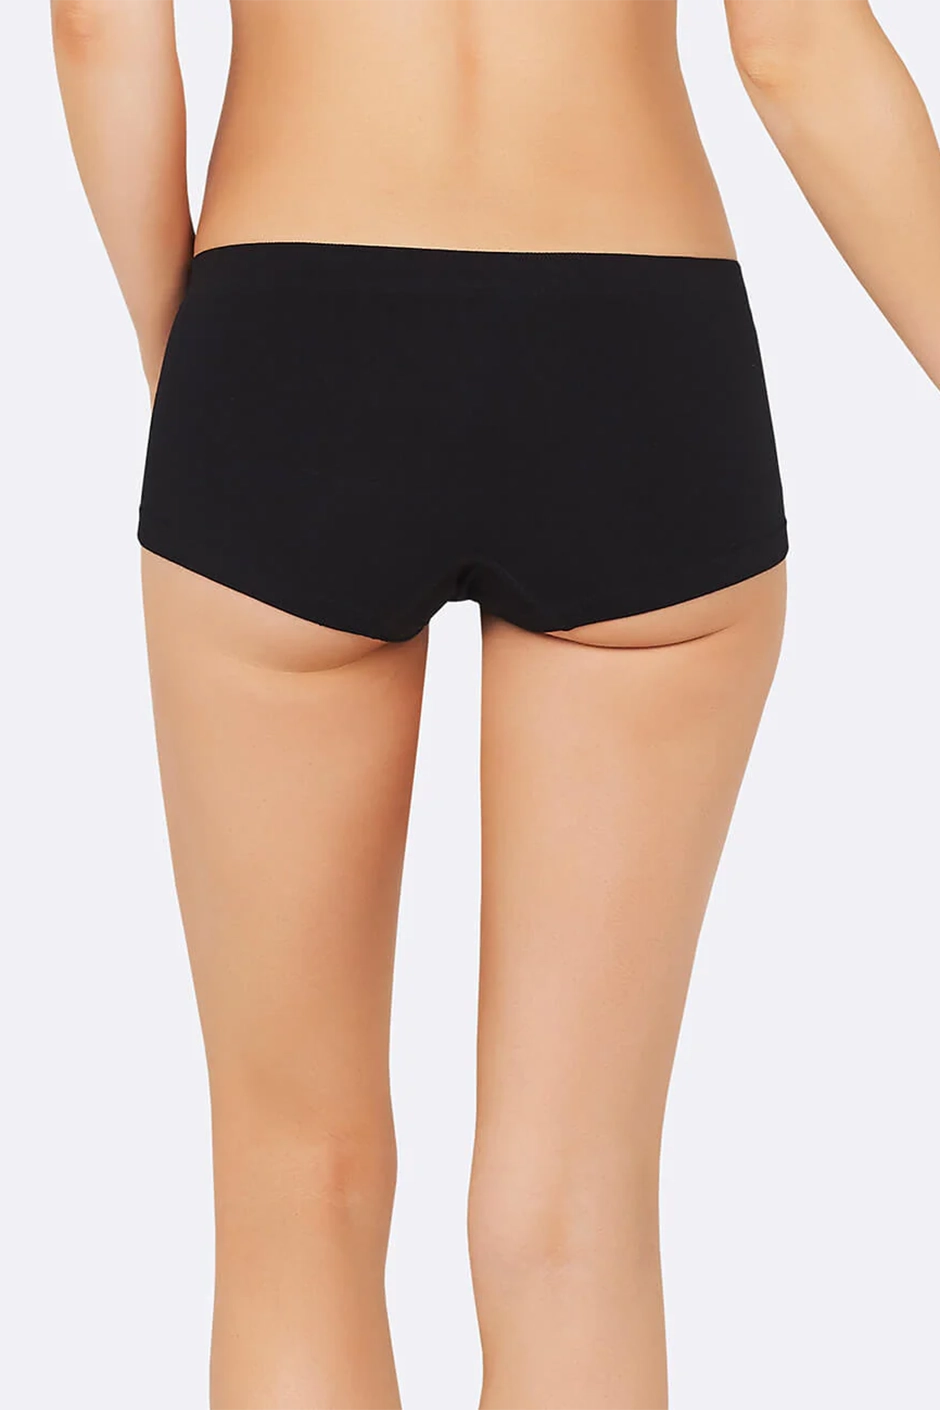 NIP GIRL'S Underwear Hipster Brief Boy Short U Chose Style & Size $7.99 -  PicClick